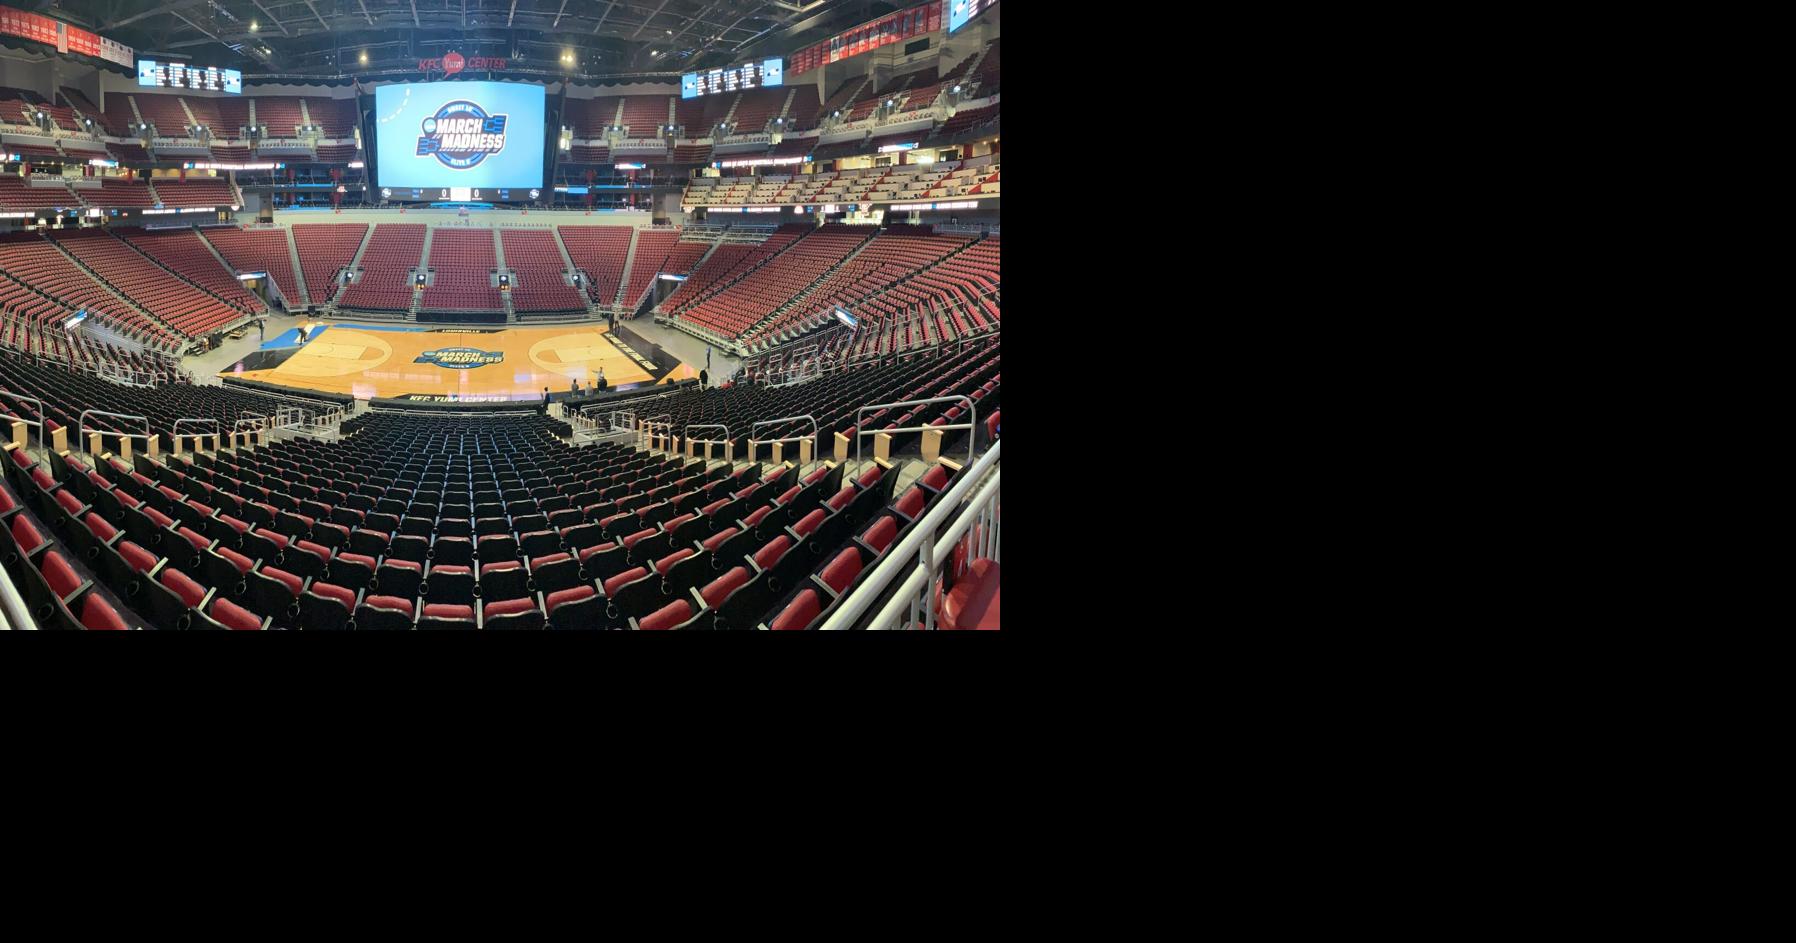 IMAGES NCAA Tournament floor installed at Louisville's KFC Yum